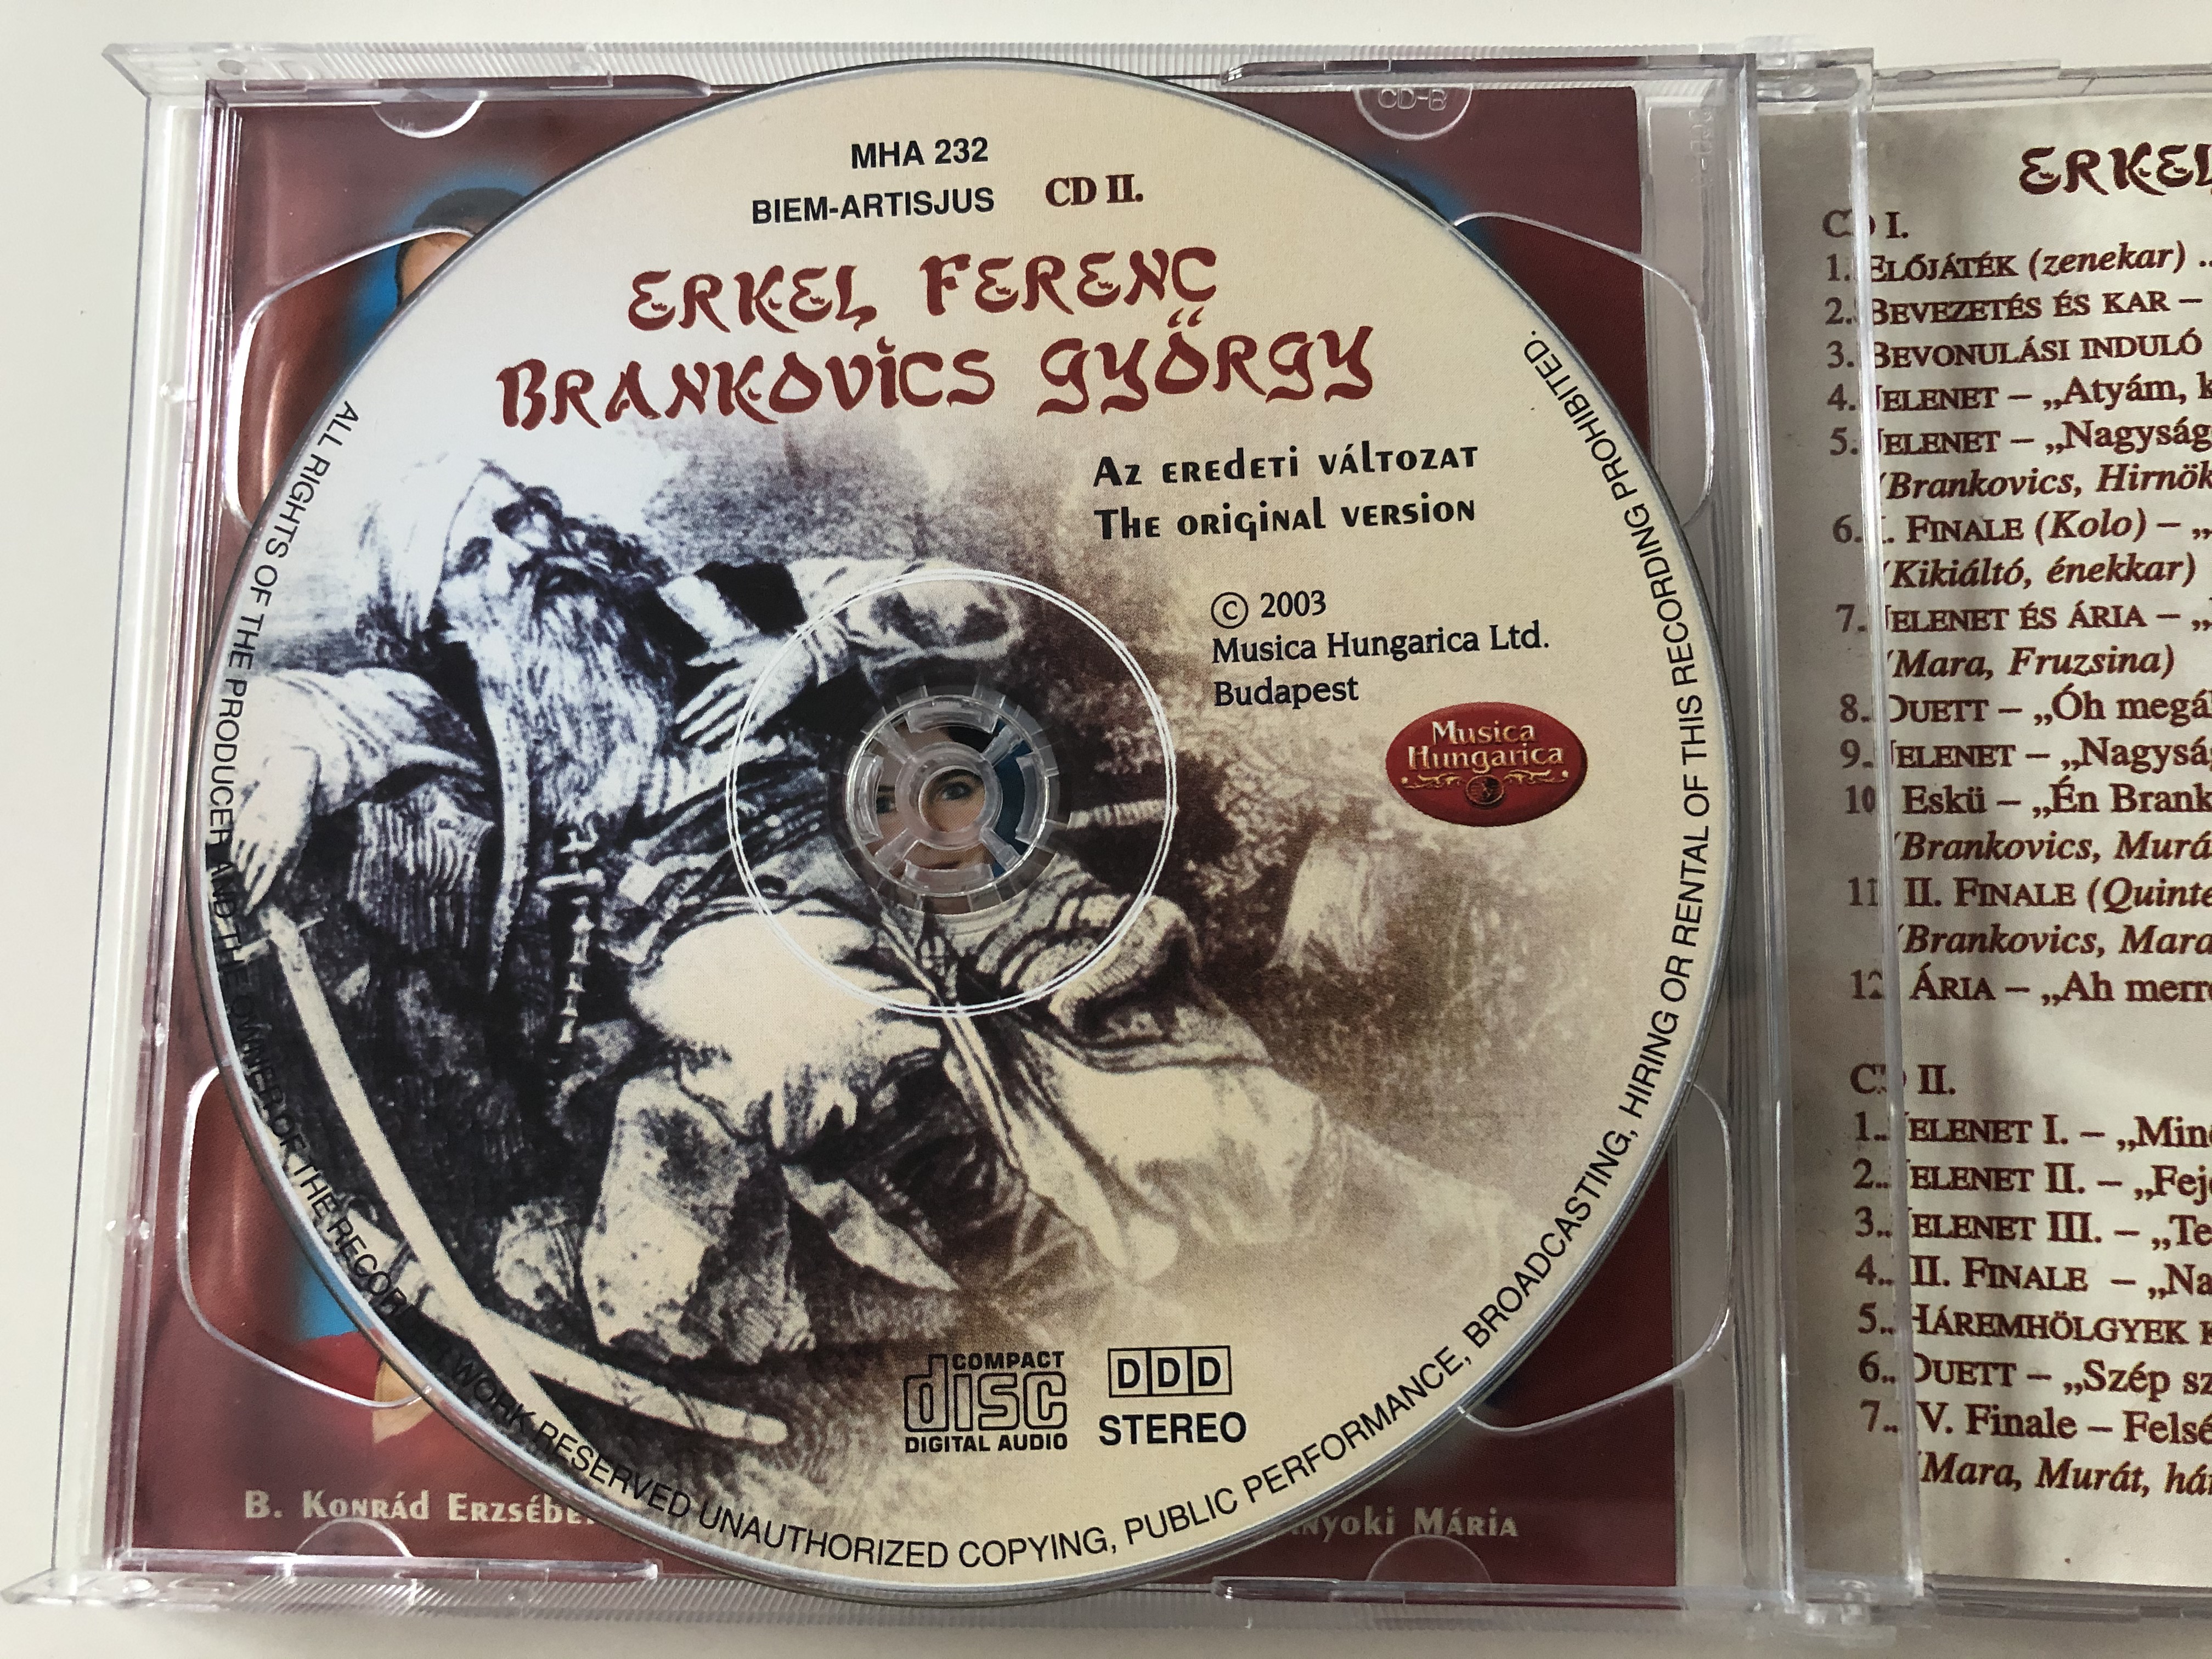 brankovics-gyorgy-opera-az-eredeti-valtozat-the-original-version-erkel-ferenc-musica-hungarica-ltd.-2x-audio-cd-2003-stereo-mha-232-4-.jpg